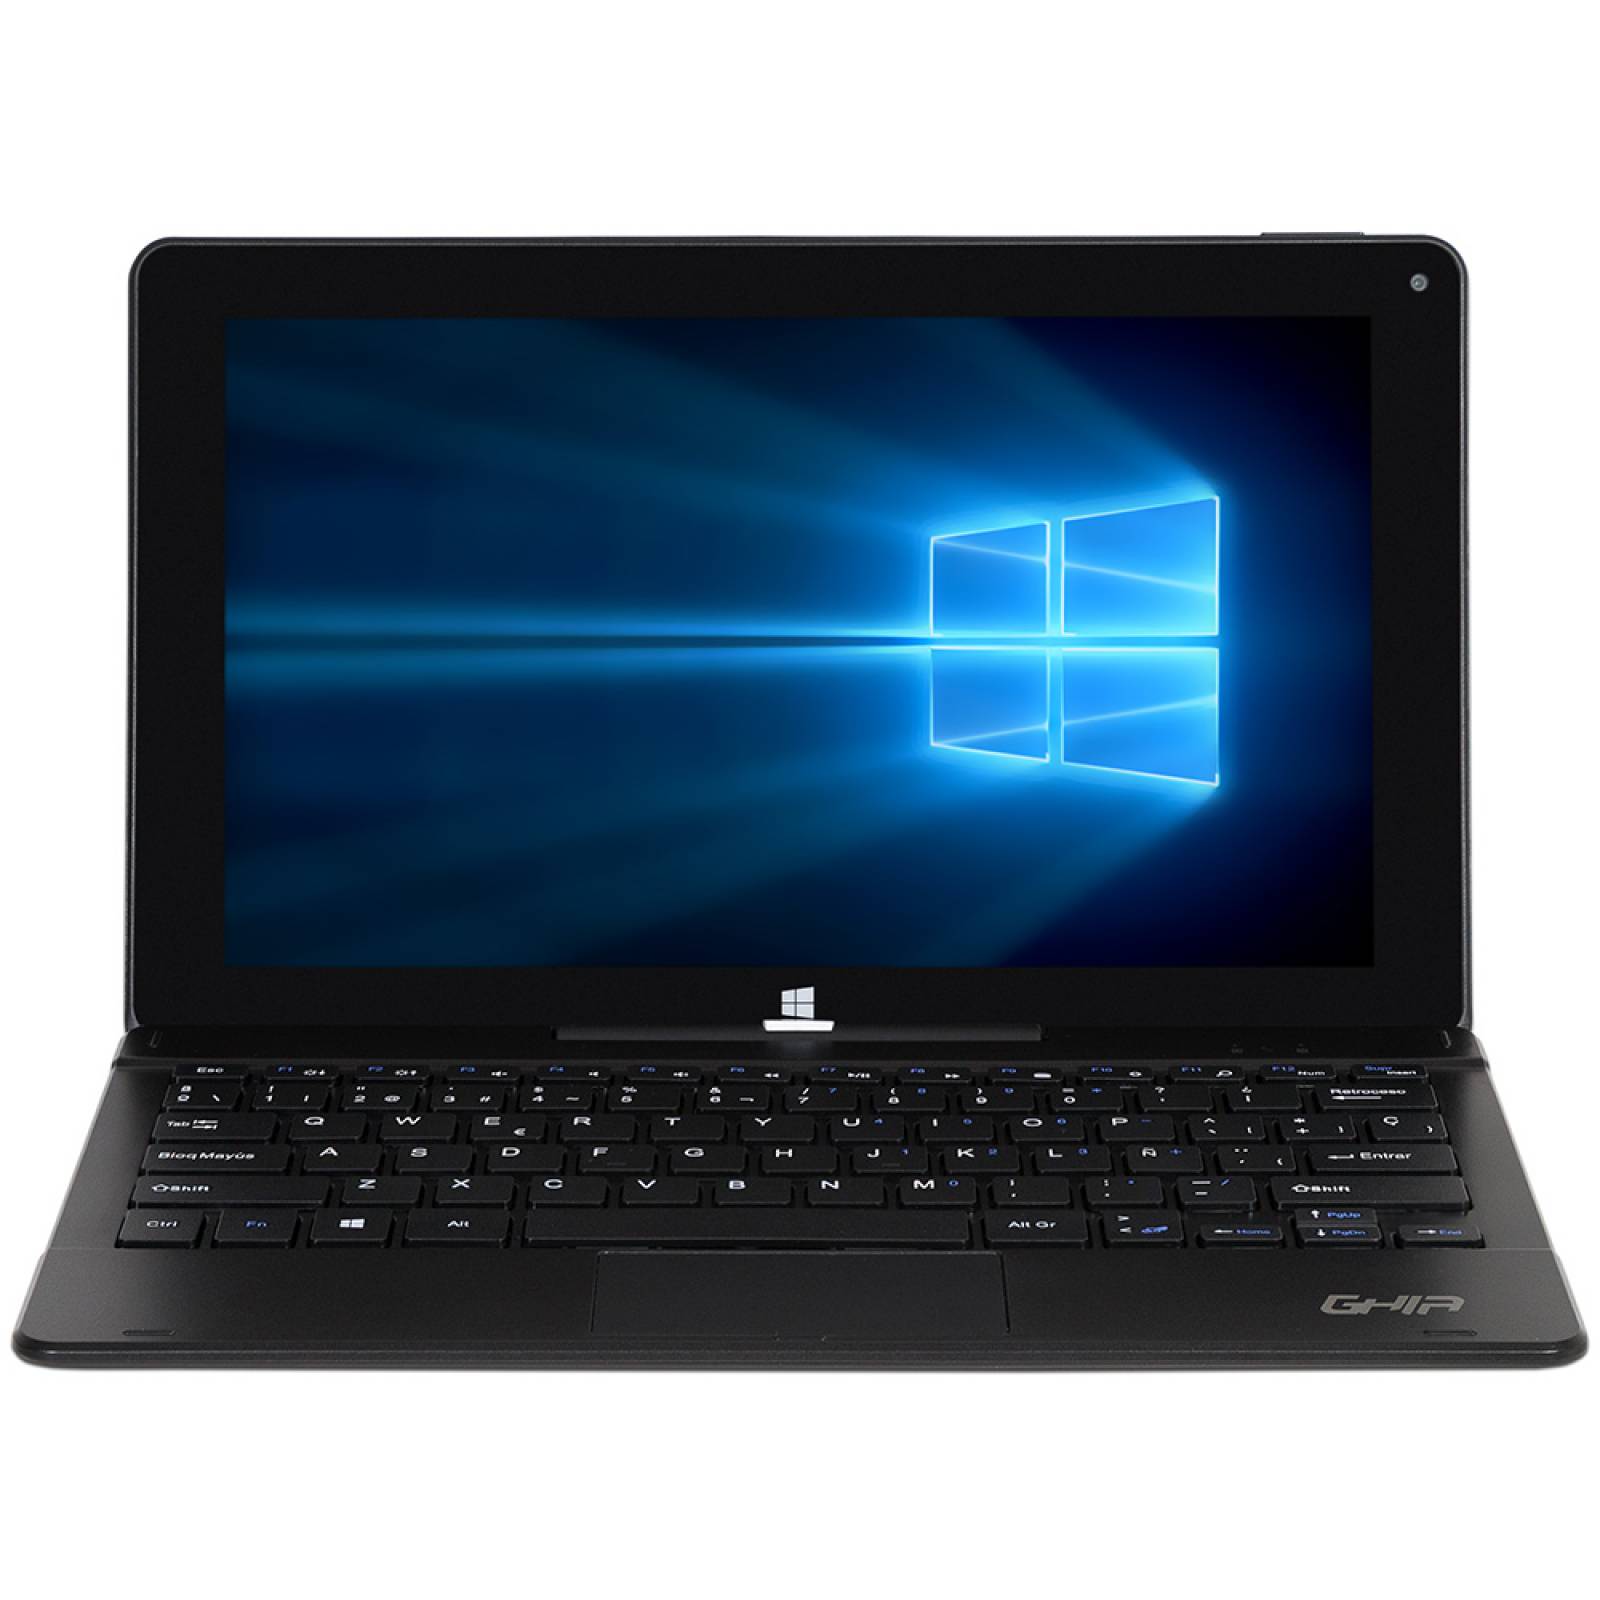 Laptop 2 en 1 GHIA Blaze: Procesador Intel Atom Z8350 Memoria de 2GB LPDDR3 Almacenamiento de 32GB Pantalla de 11.6 pulgadas LED Multi Touch Video Intel HD Graphics S.O. Windows 10 Home